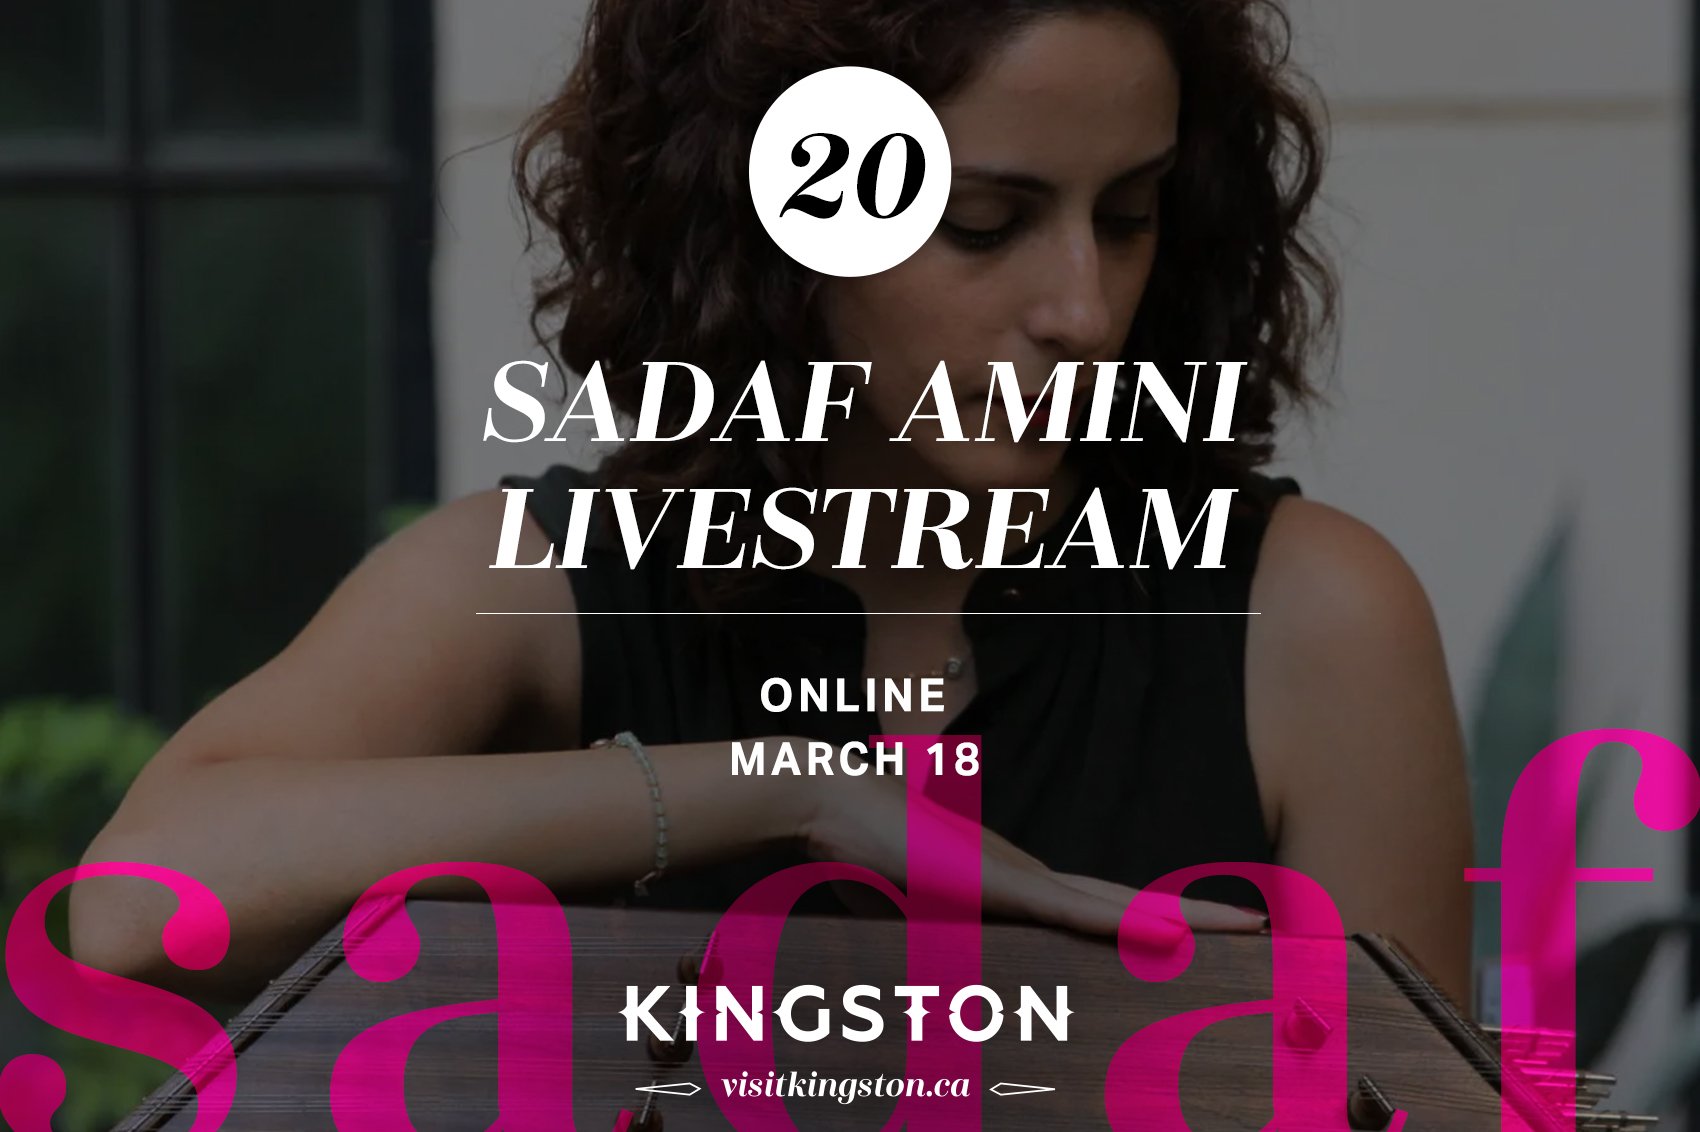 Sadaf Amini livestream